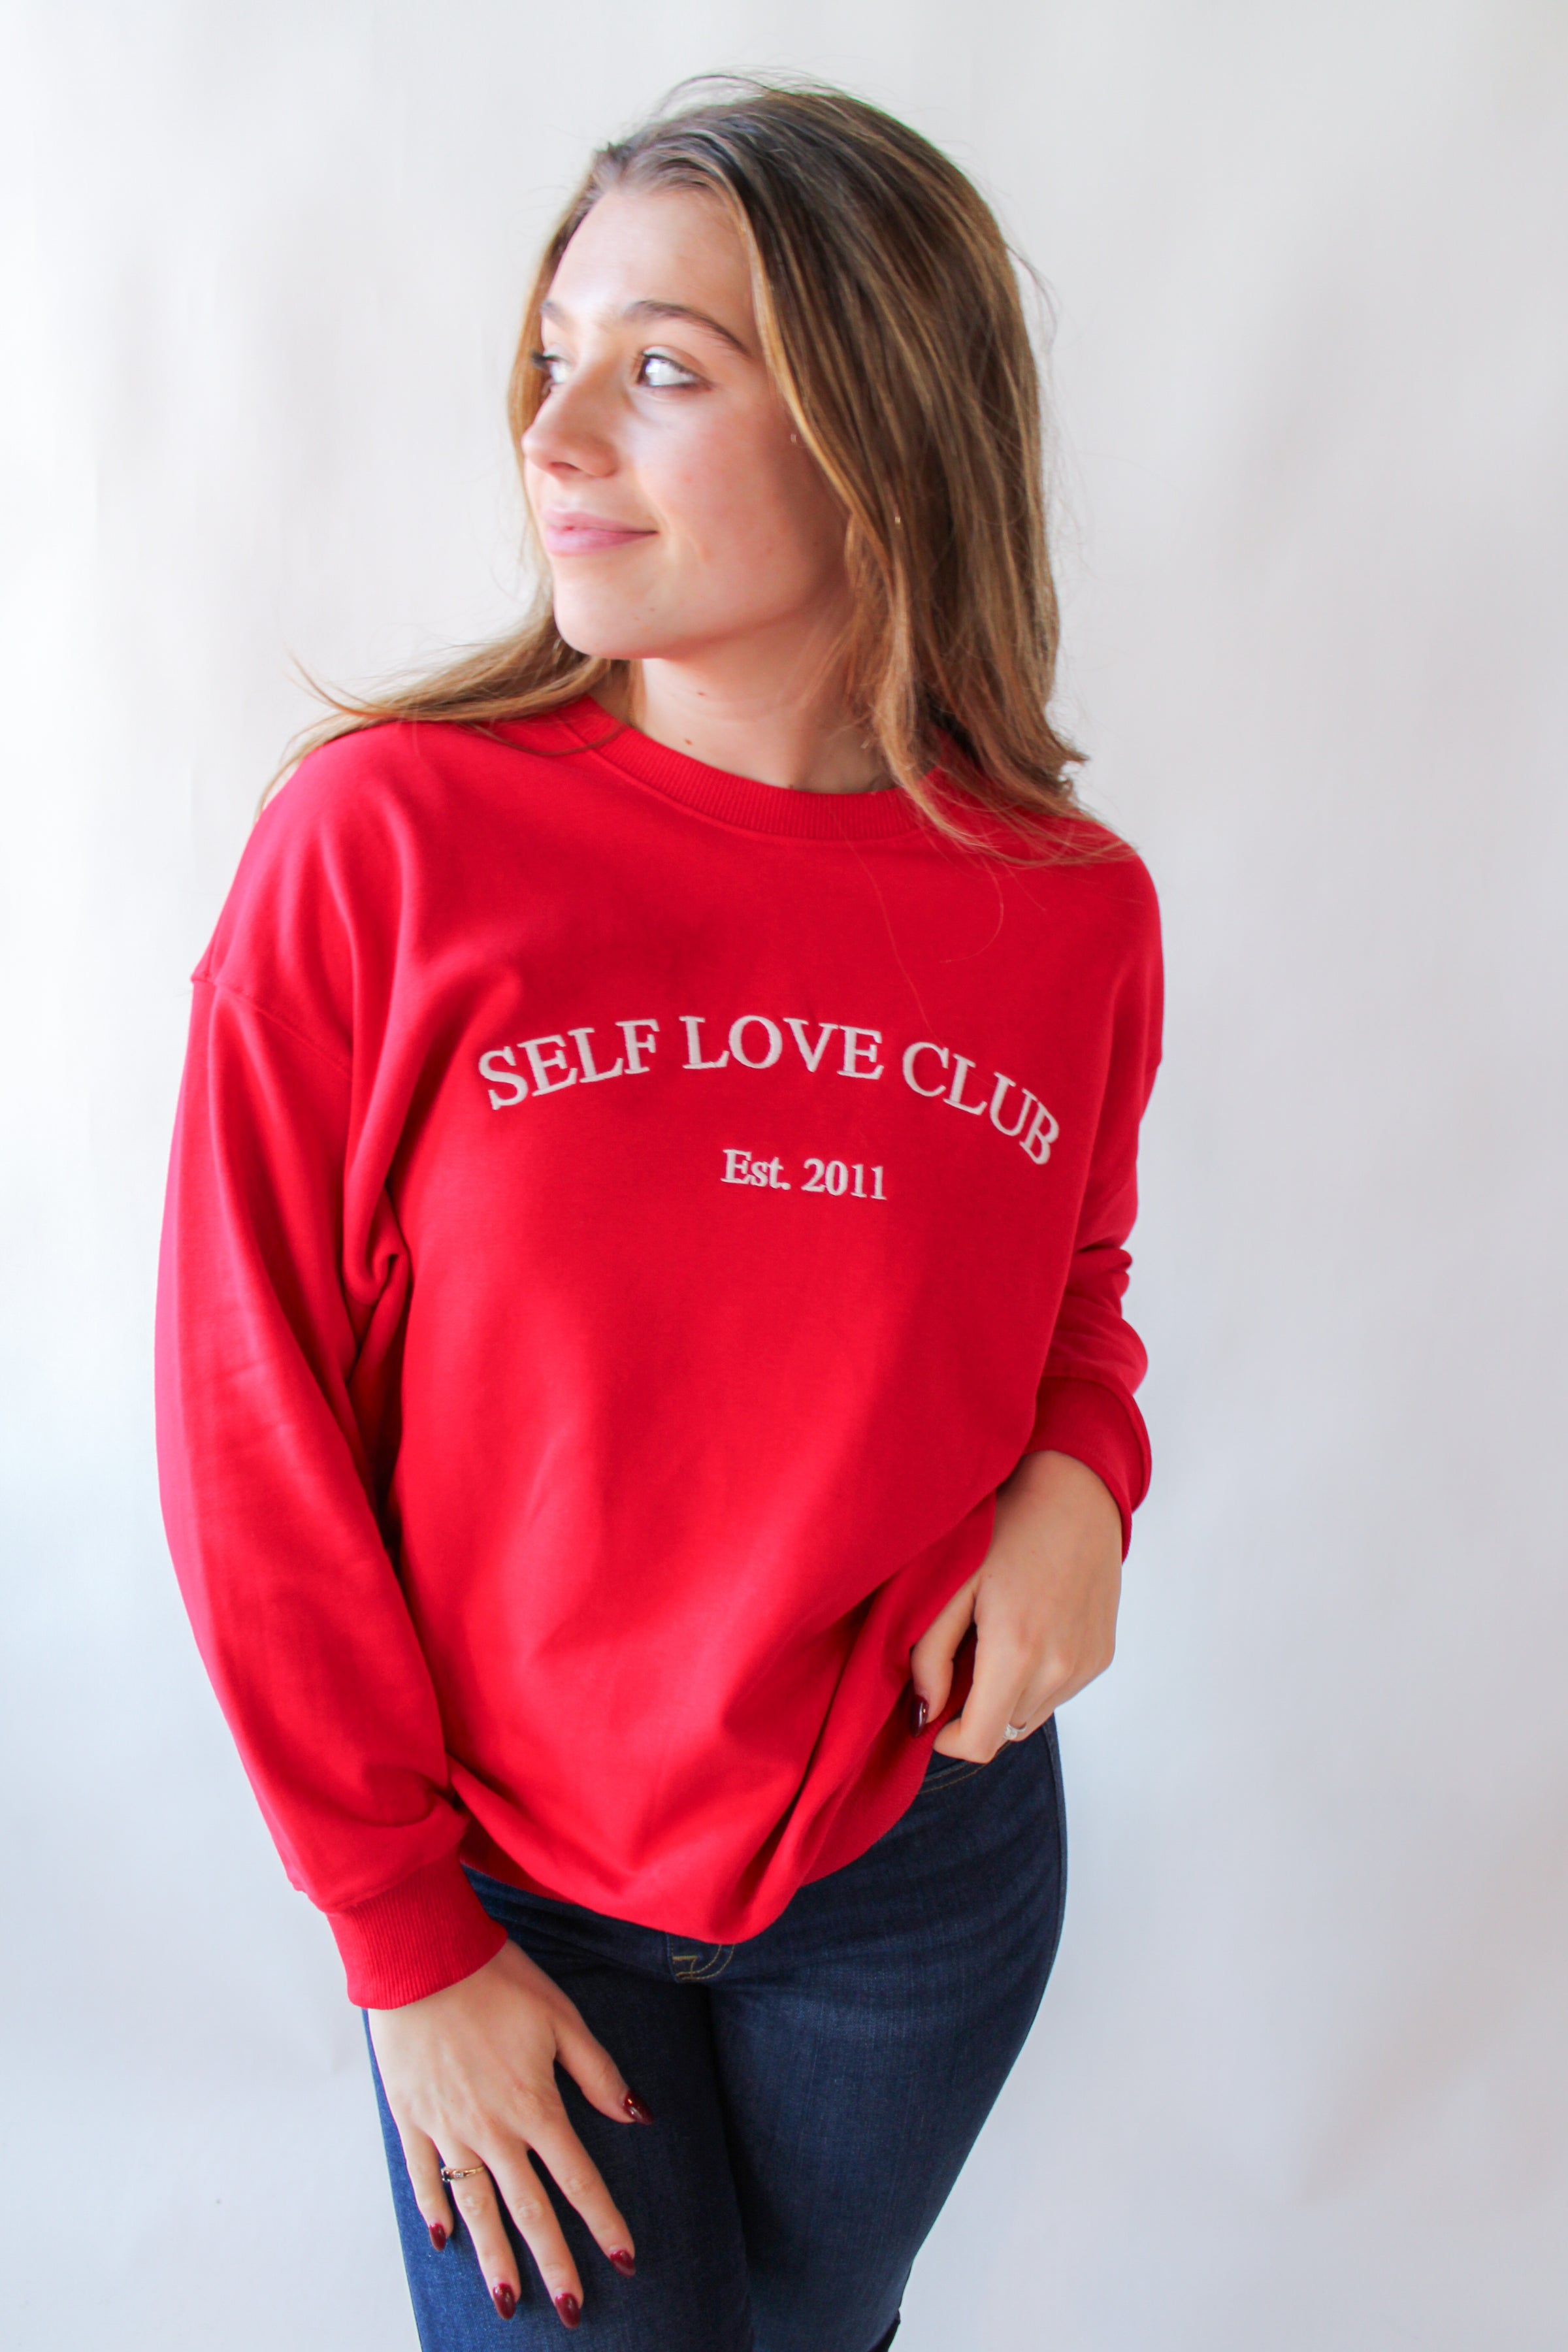 Self Love Club Pullover